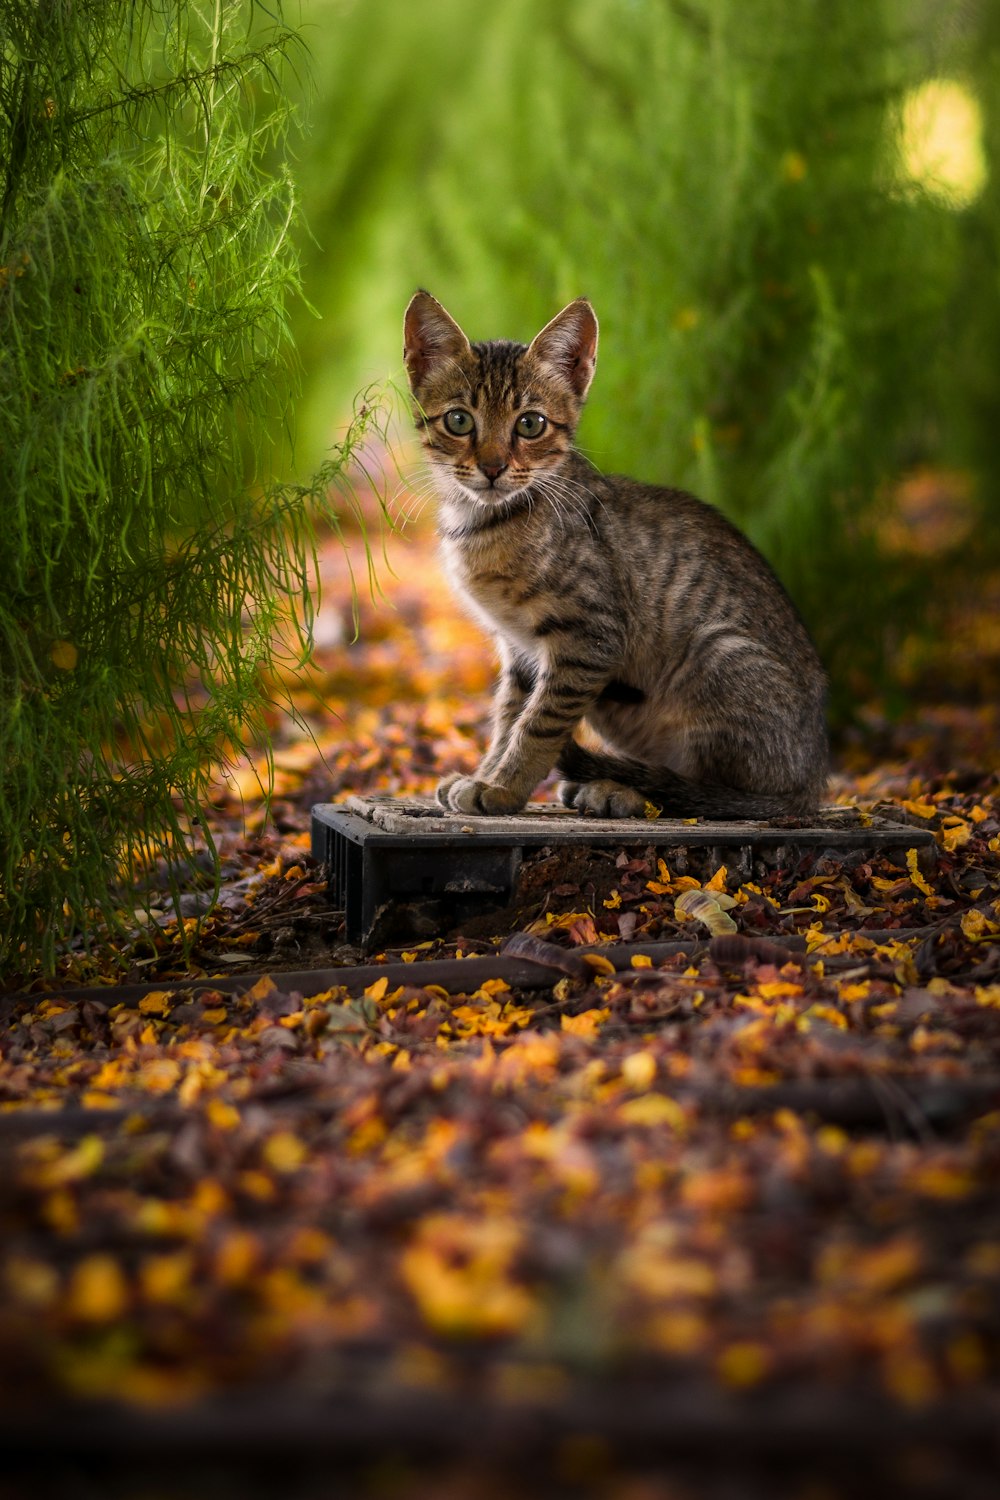 a cat sitting on a log